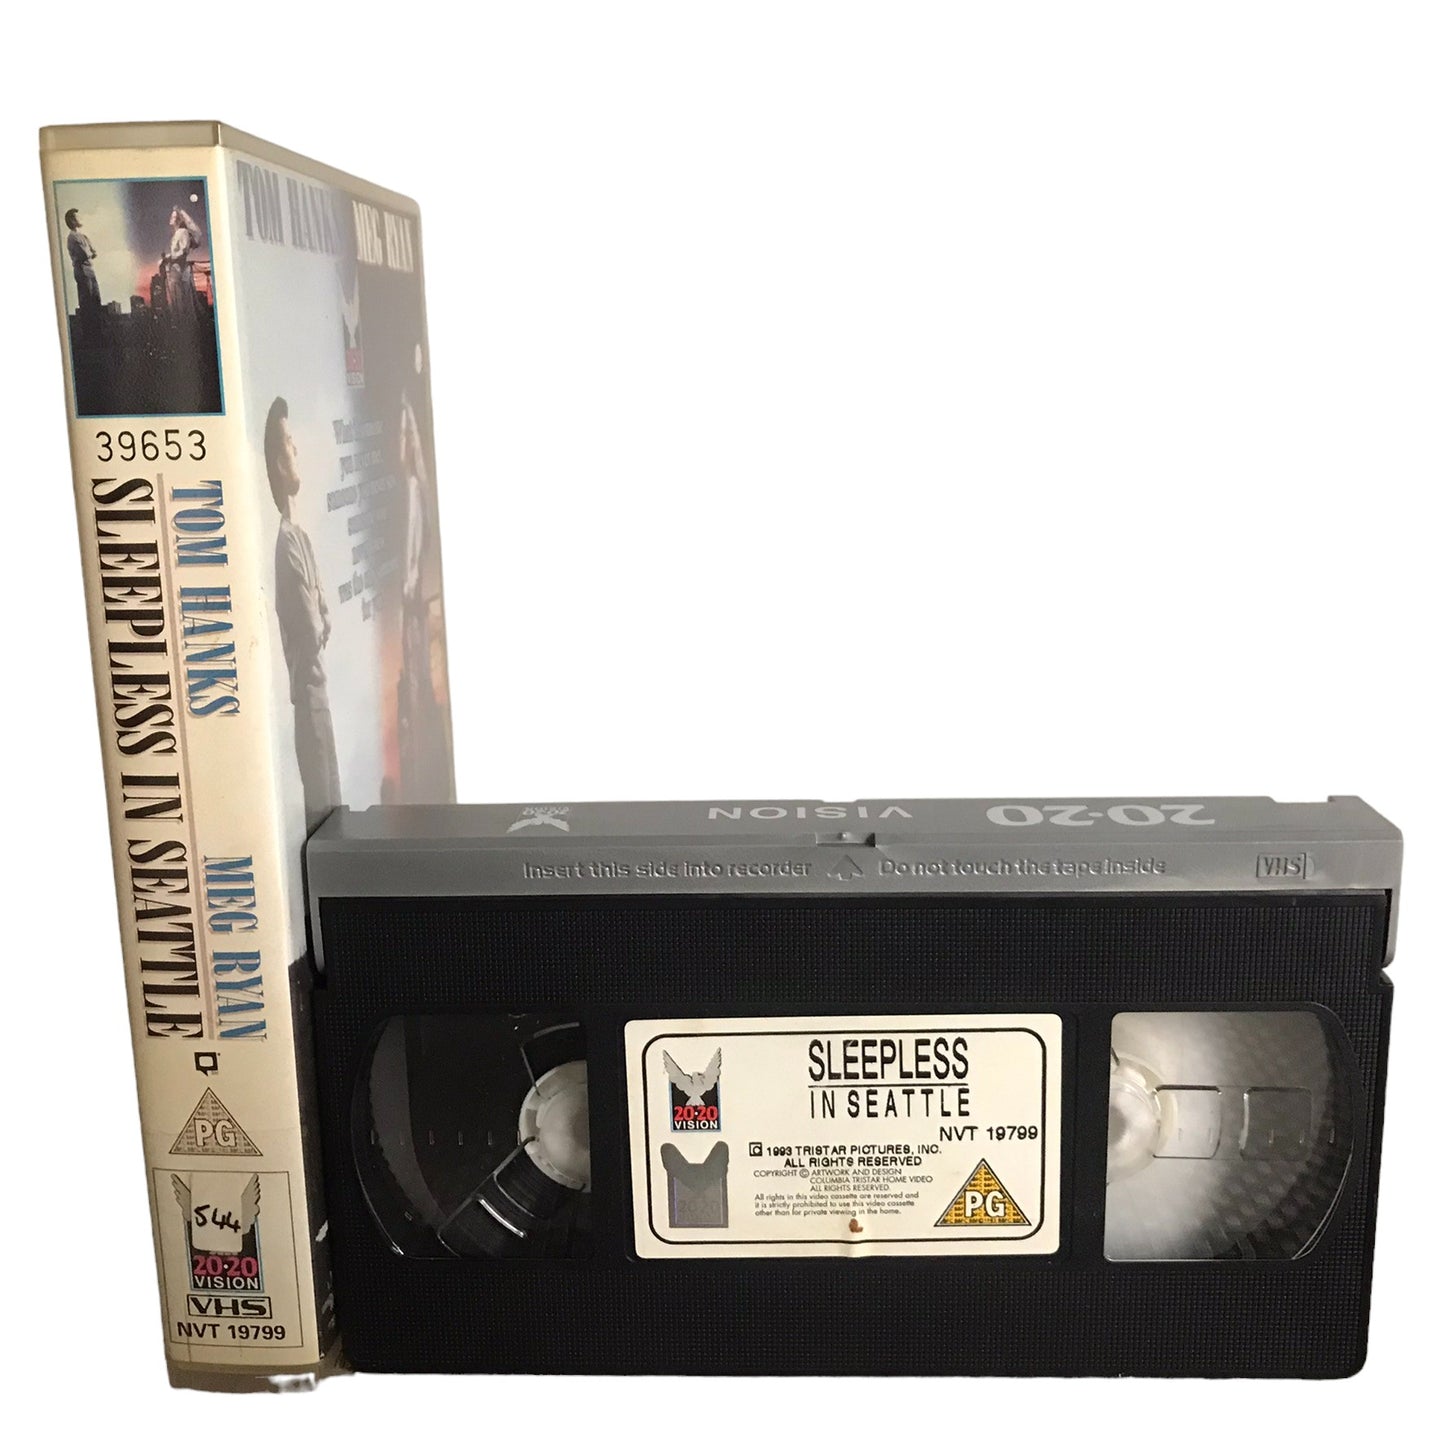 Sleepless In Seattle - Tom Hanks - 20-20 Vision - Large Box - Pal - VHS-